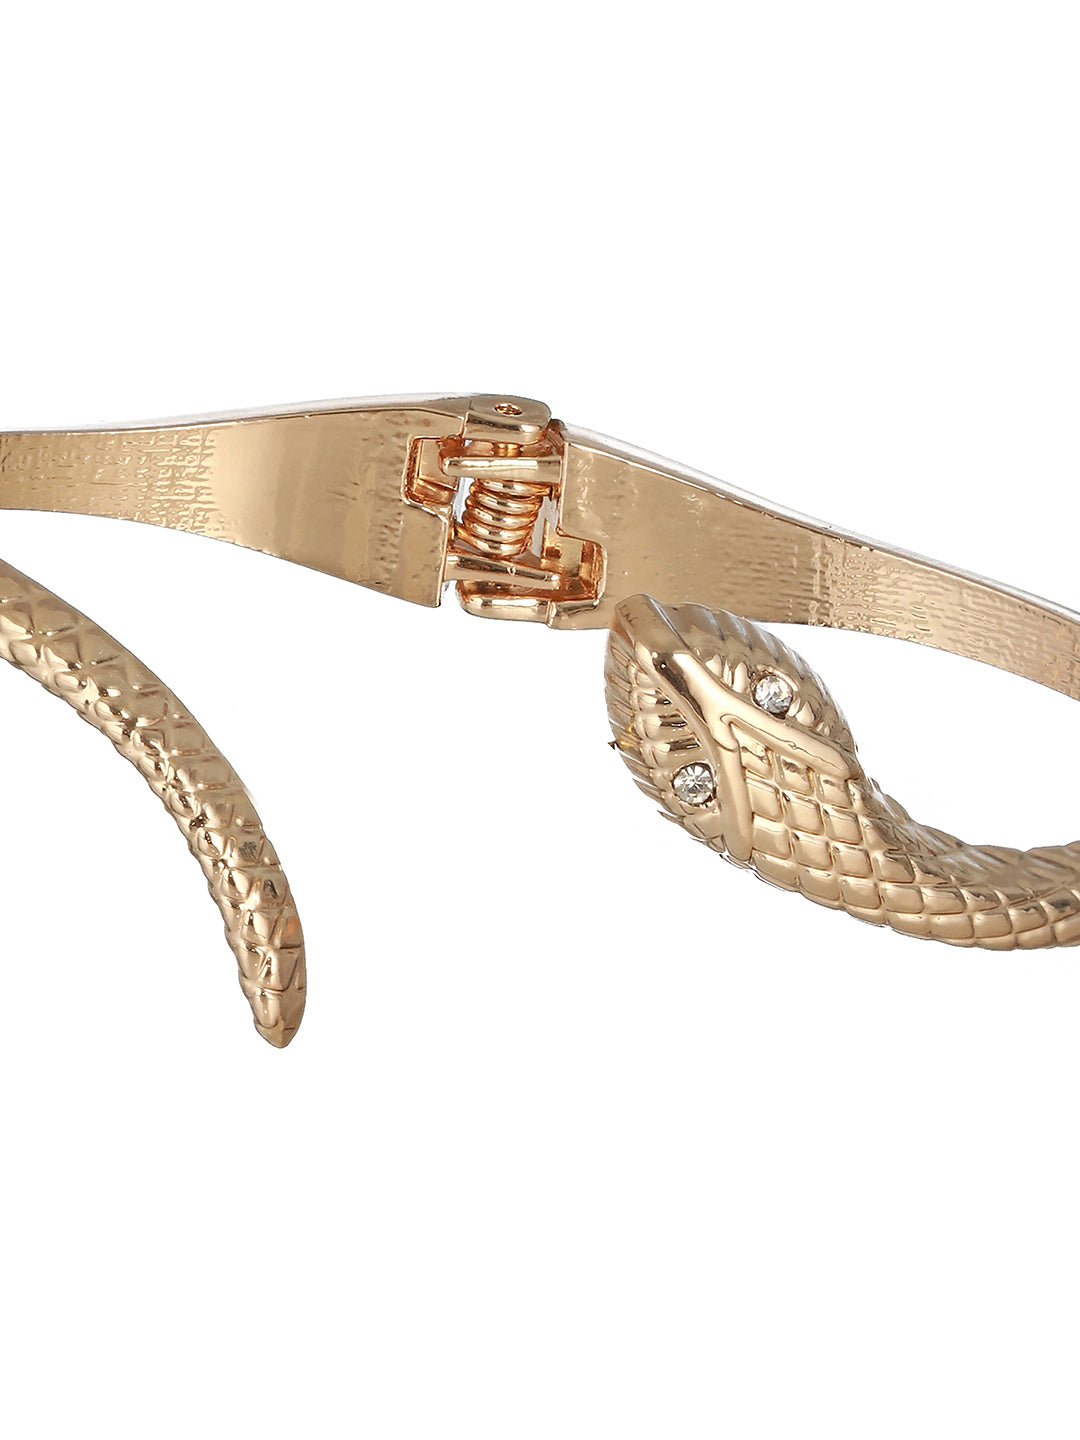 Prita by Priyaasi Sparkling Eye Studded Snake Gold-Plated Bracelet